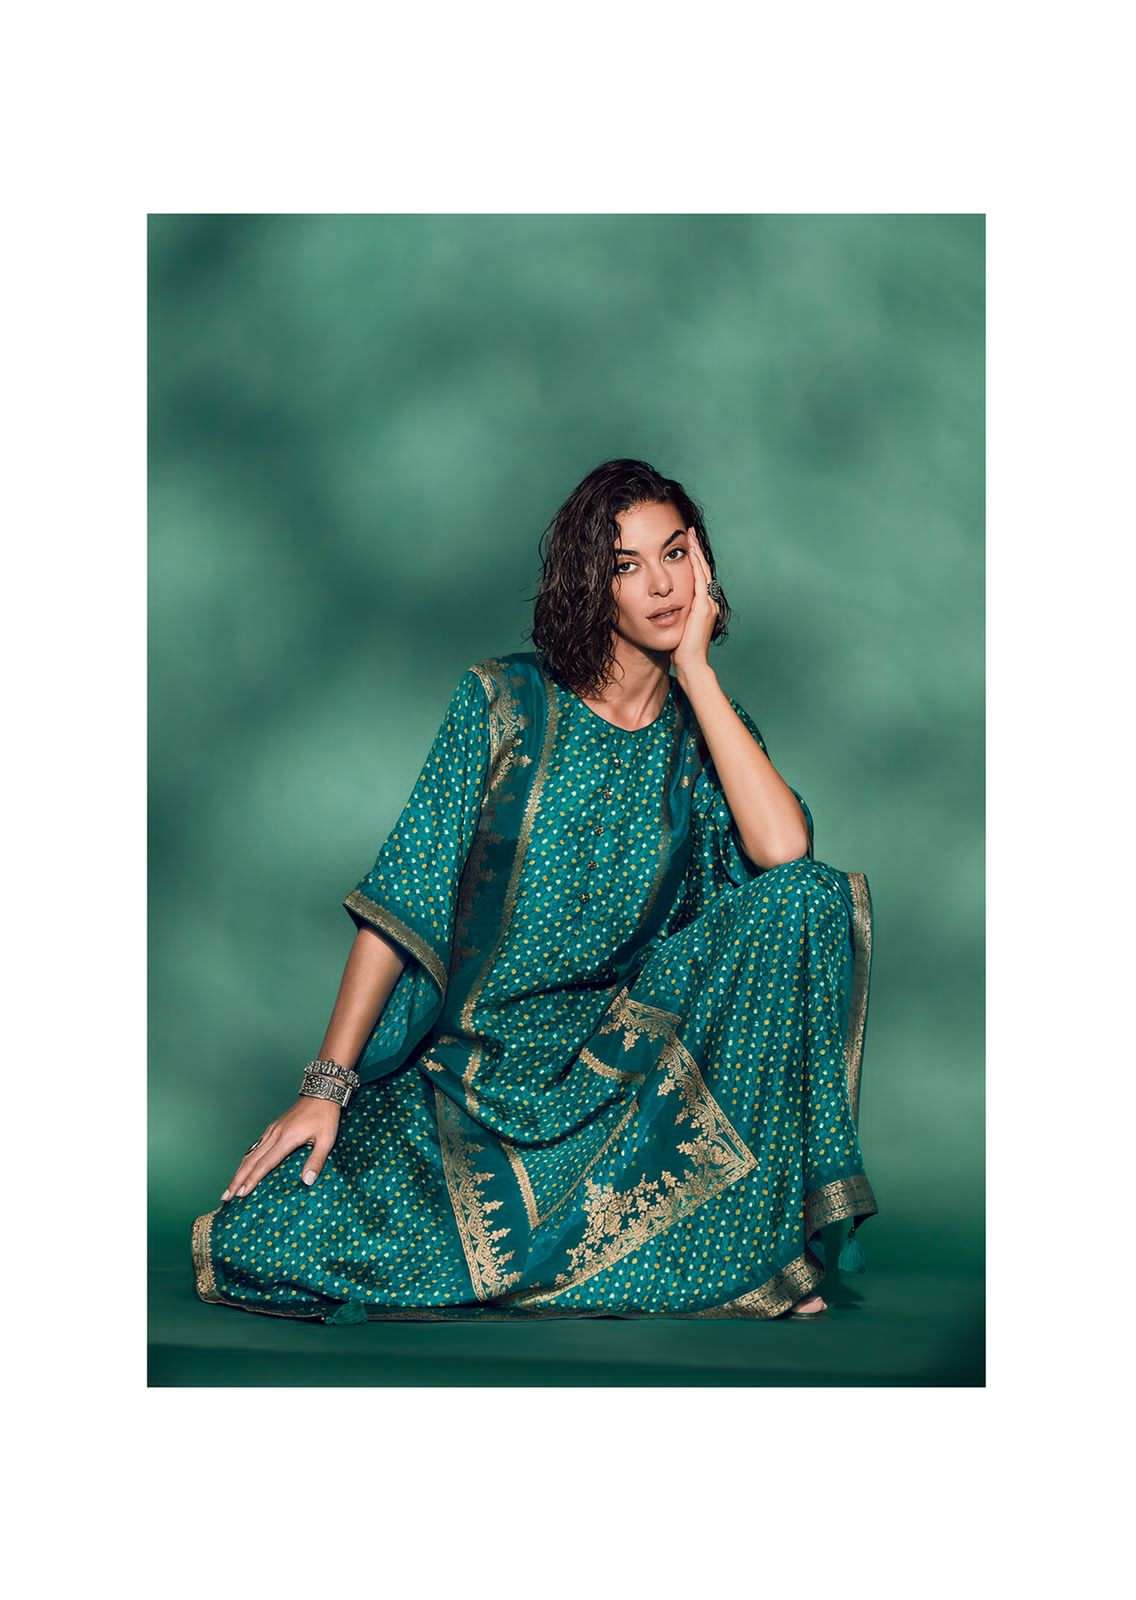 varsha fashion maanvi 134-136 series stylish designer salwar kameez manufacturer surat 